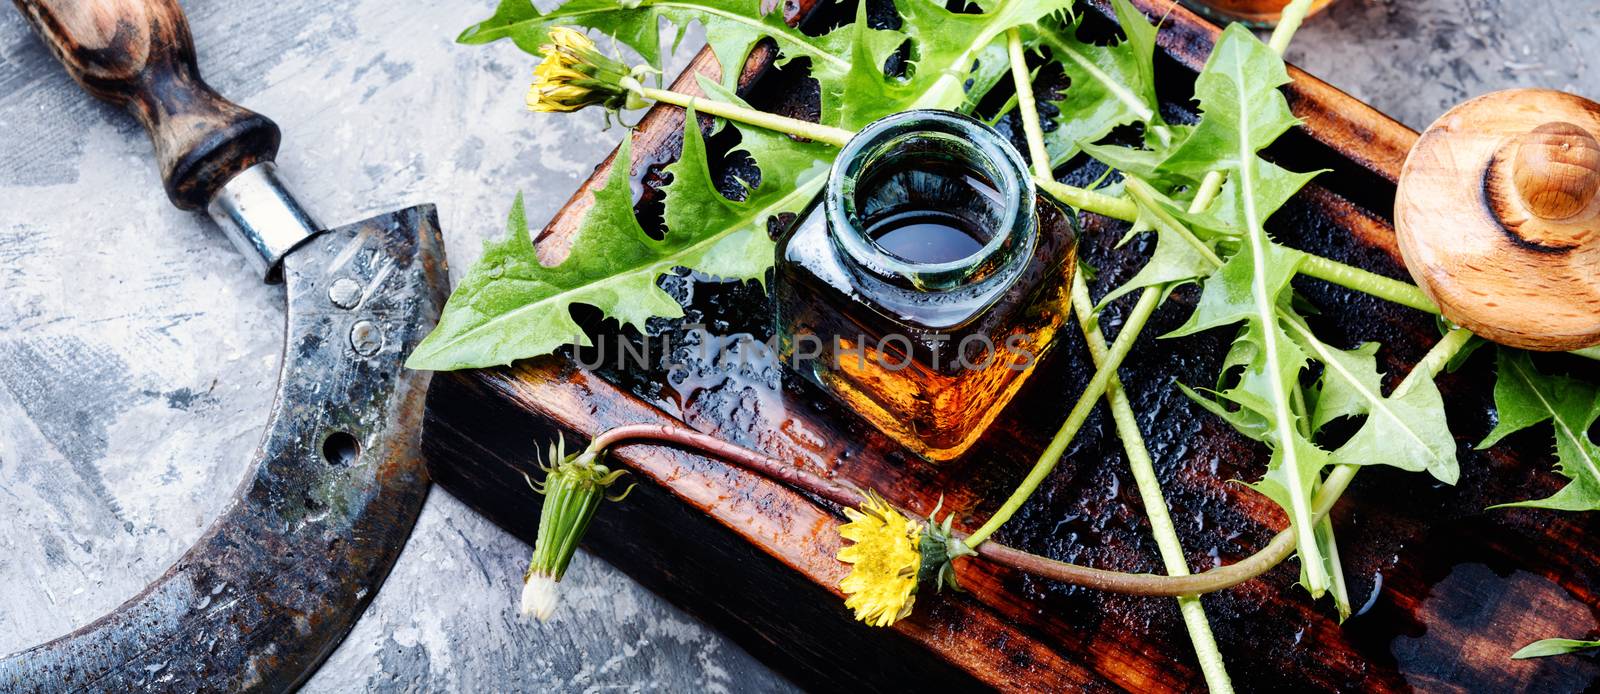 Medicinal plant dandelion or Taraxacum officinale.Dandelion leaves.Herbal medicine